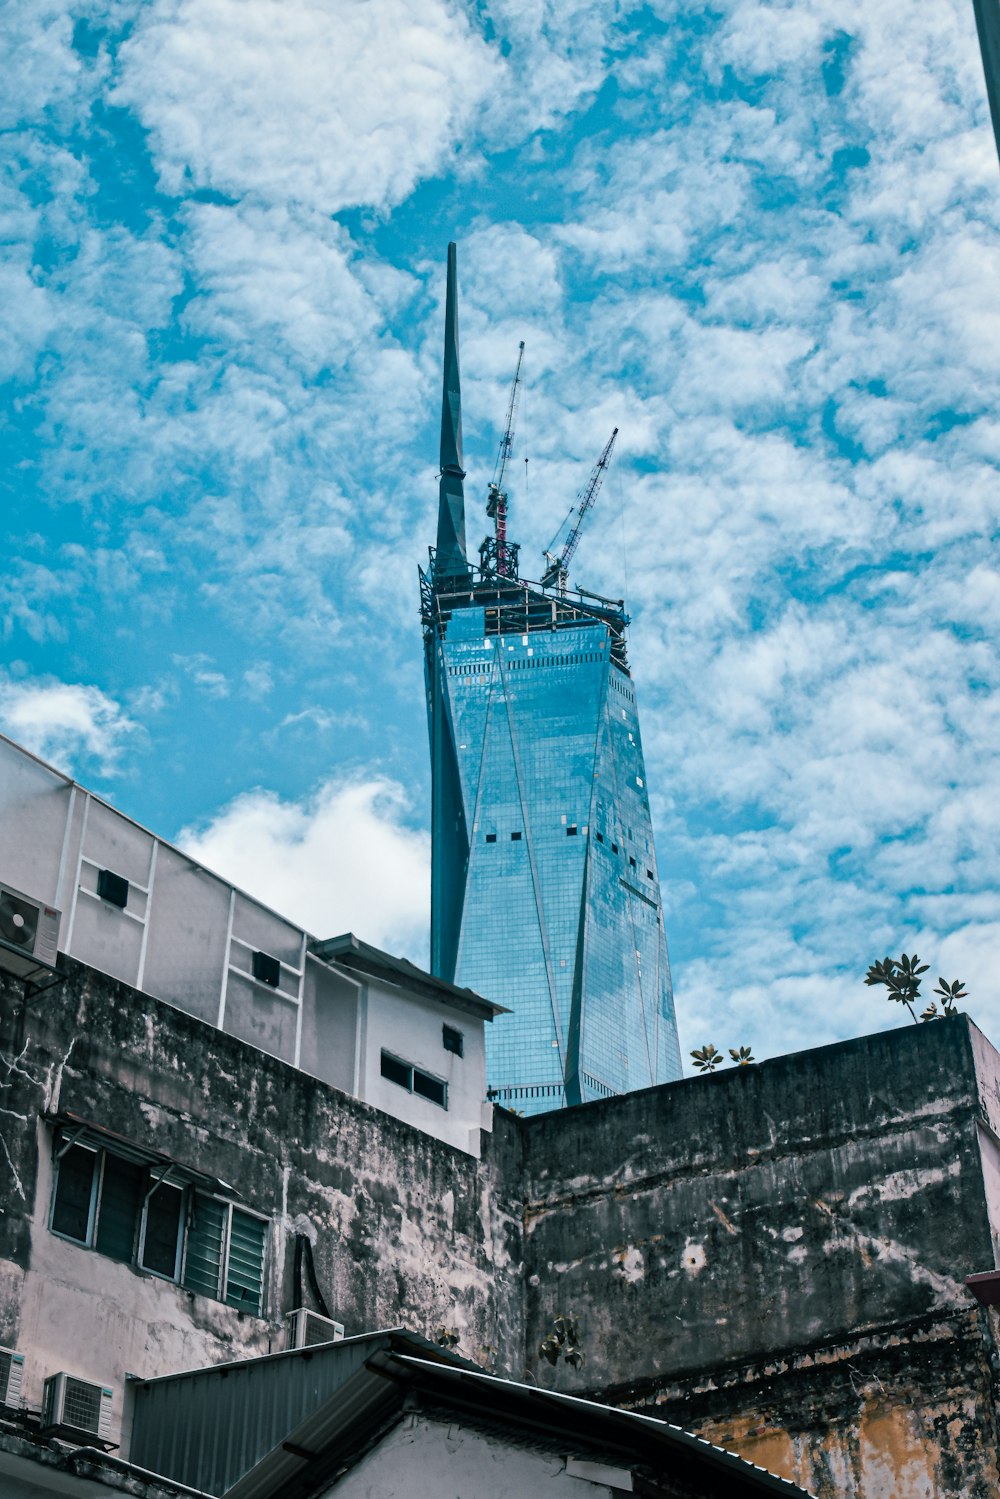 a tall building under a cloudy blue sky